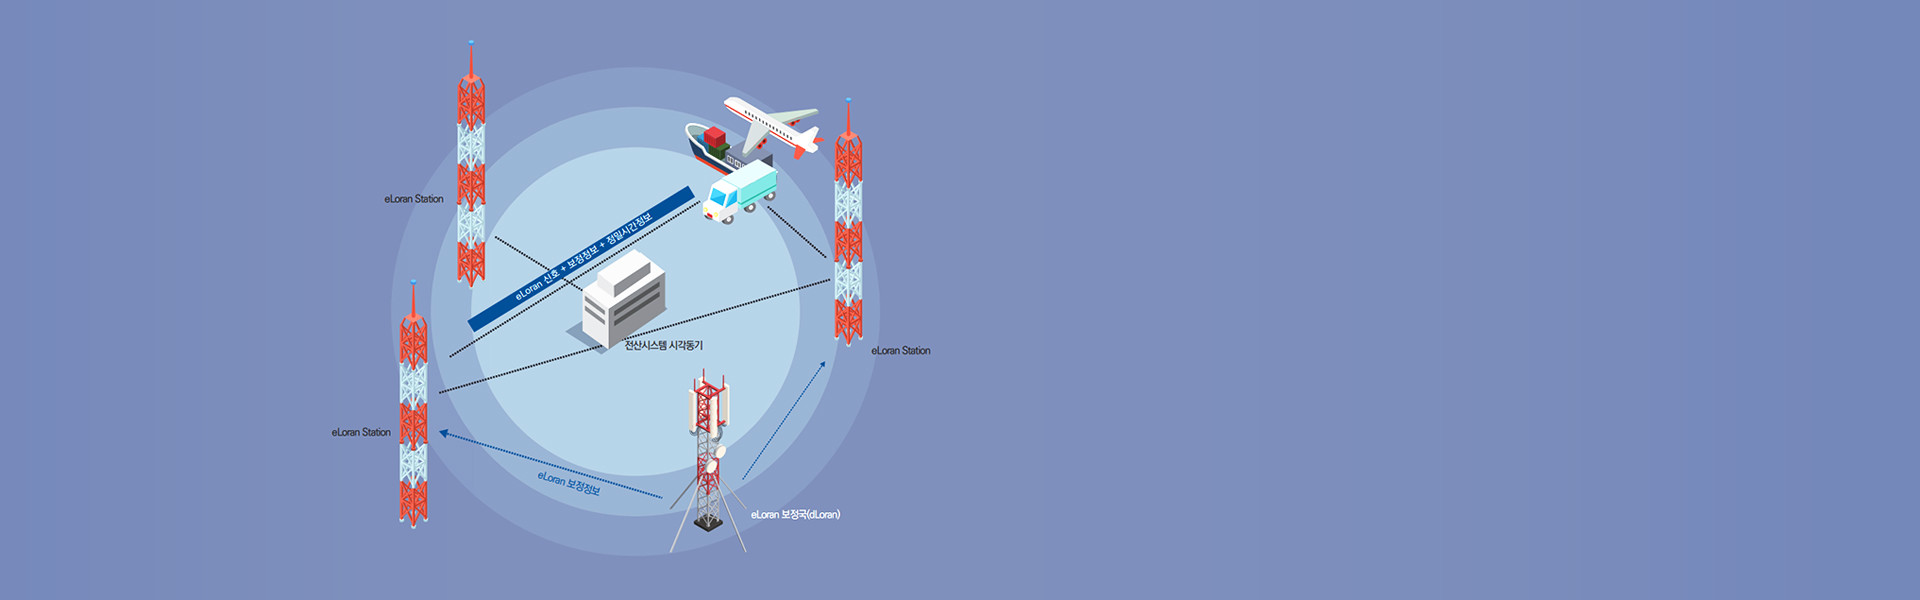 eLoran 보정국(dLoran) 에서 eLoran 보정정보를 송신하여, eLoran Station과 전산시스템 시각동기를 거쳐 eLoran 신호+보정정보+정밀시간정보가 각 산업분야(항공, 수송, 운송 등)에 사용됨 